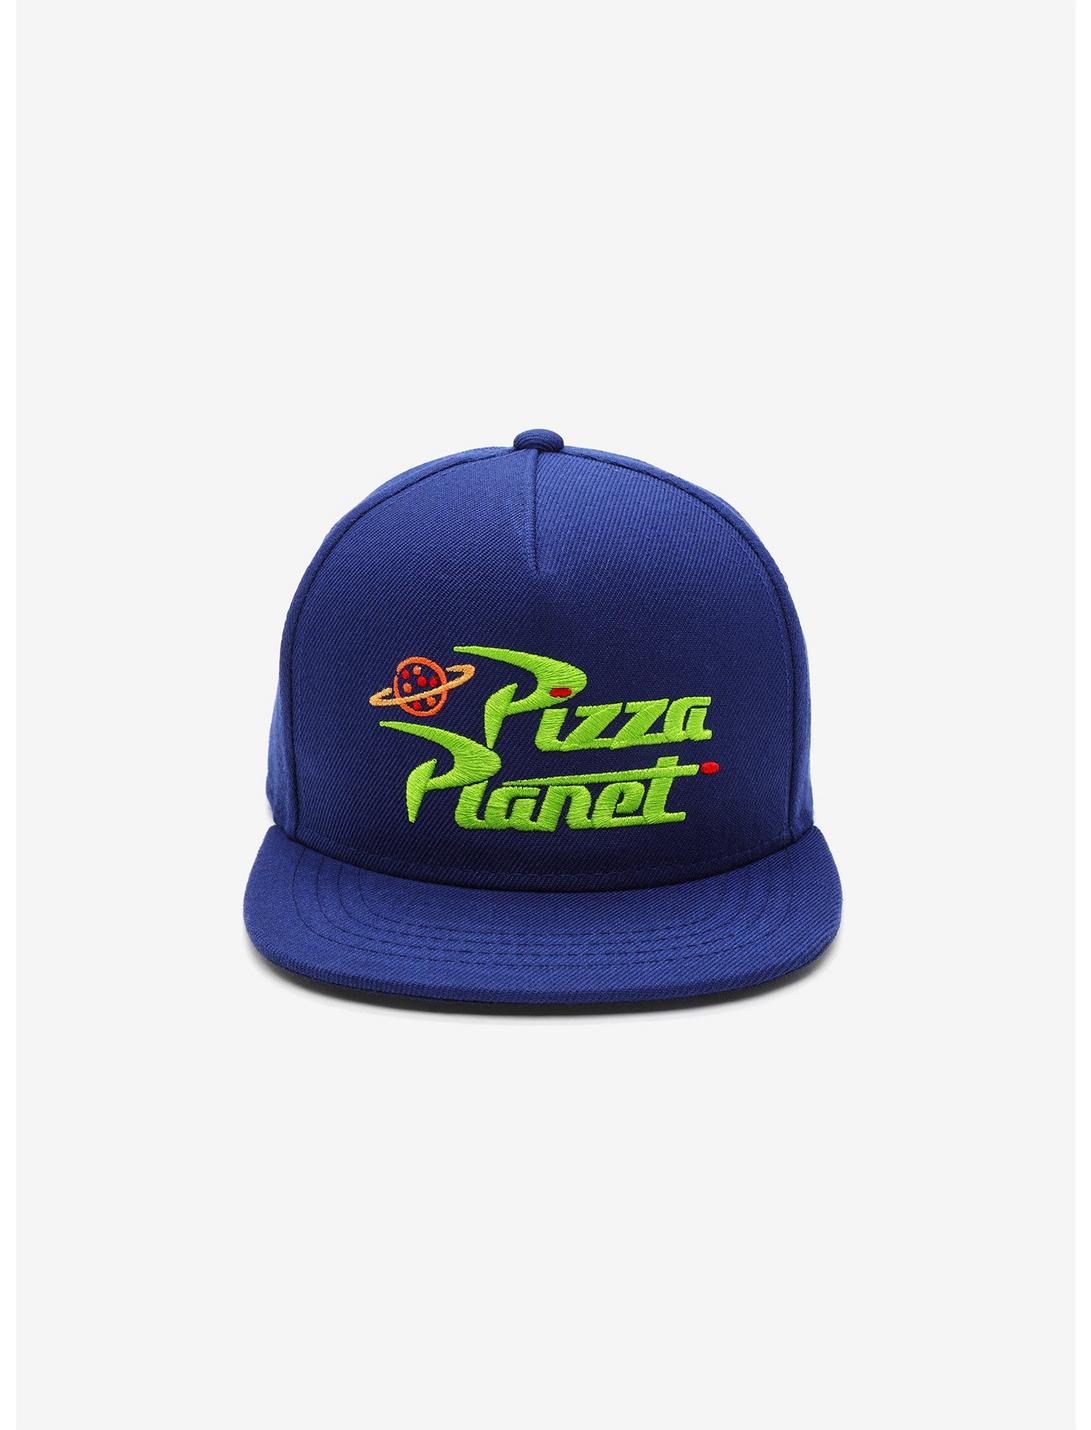 Disney Pixar Toy Story Pizza Planet Toddler Snapback Hat, , hi-res